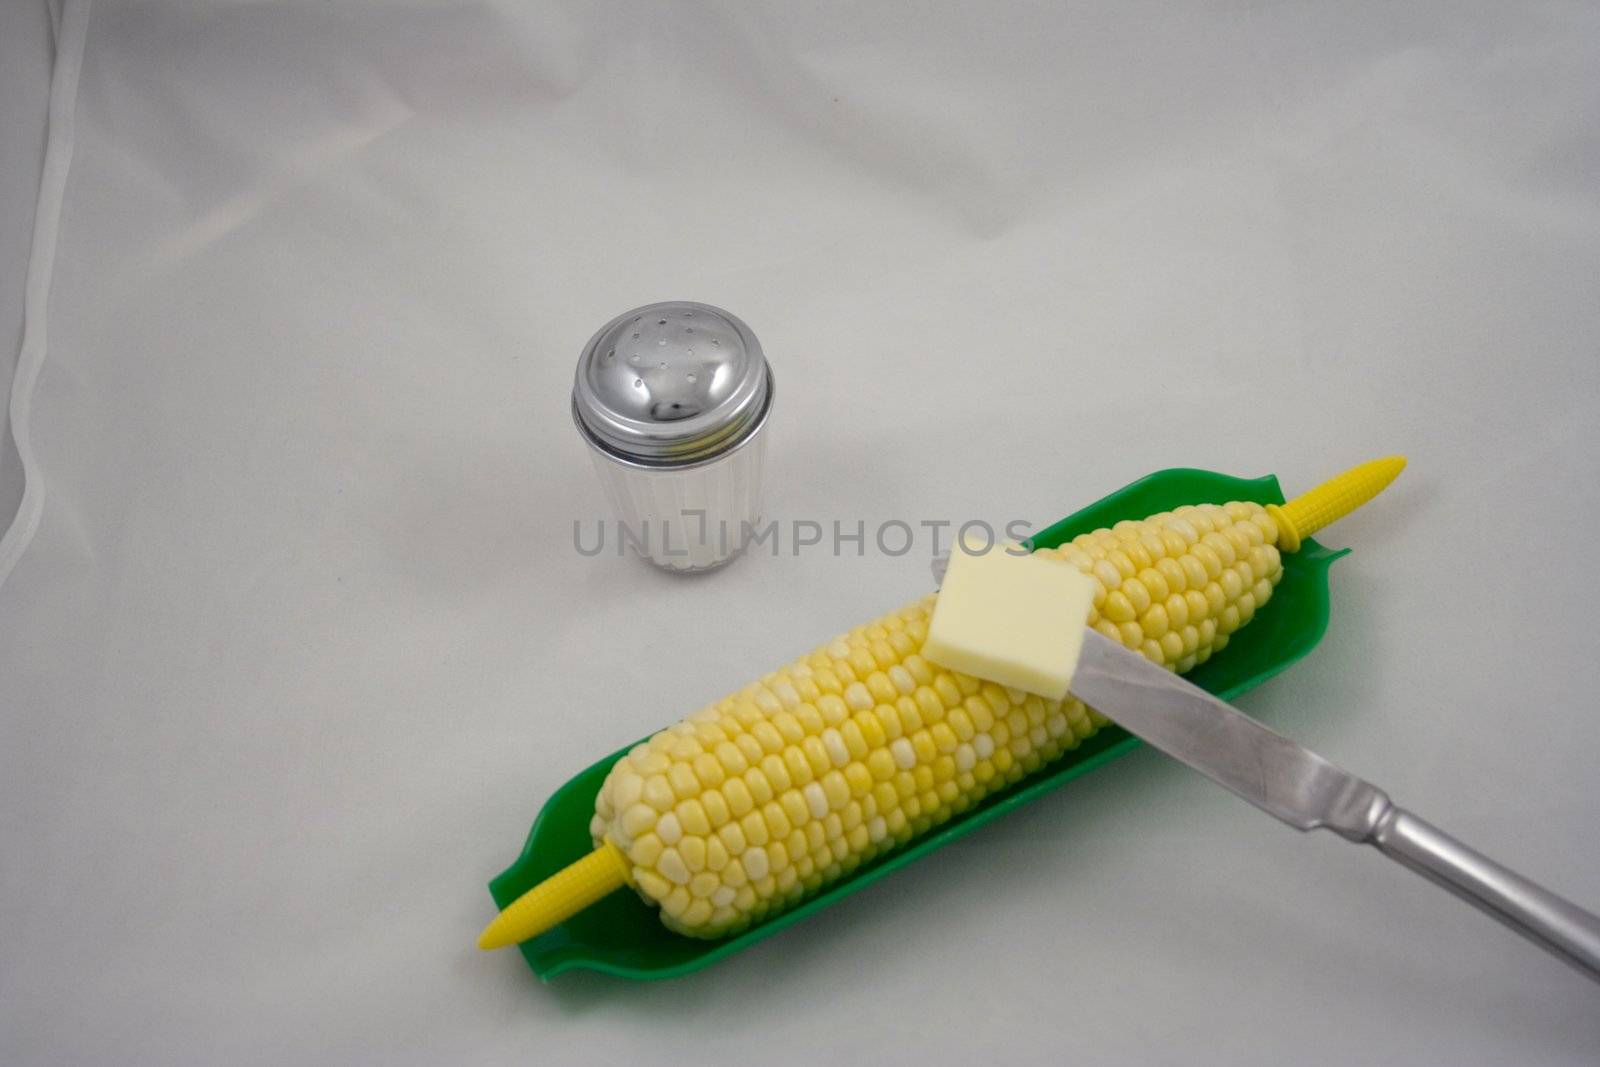 Sweet corn waiting by snokid